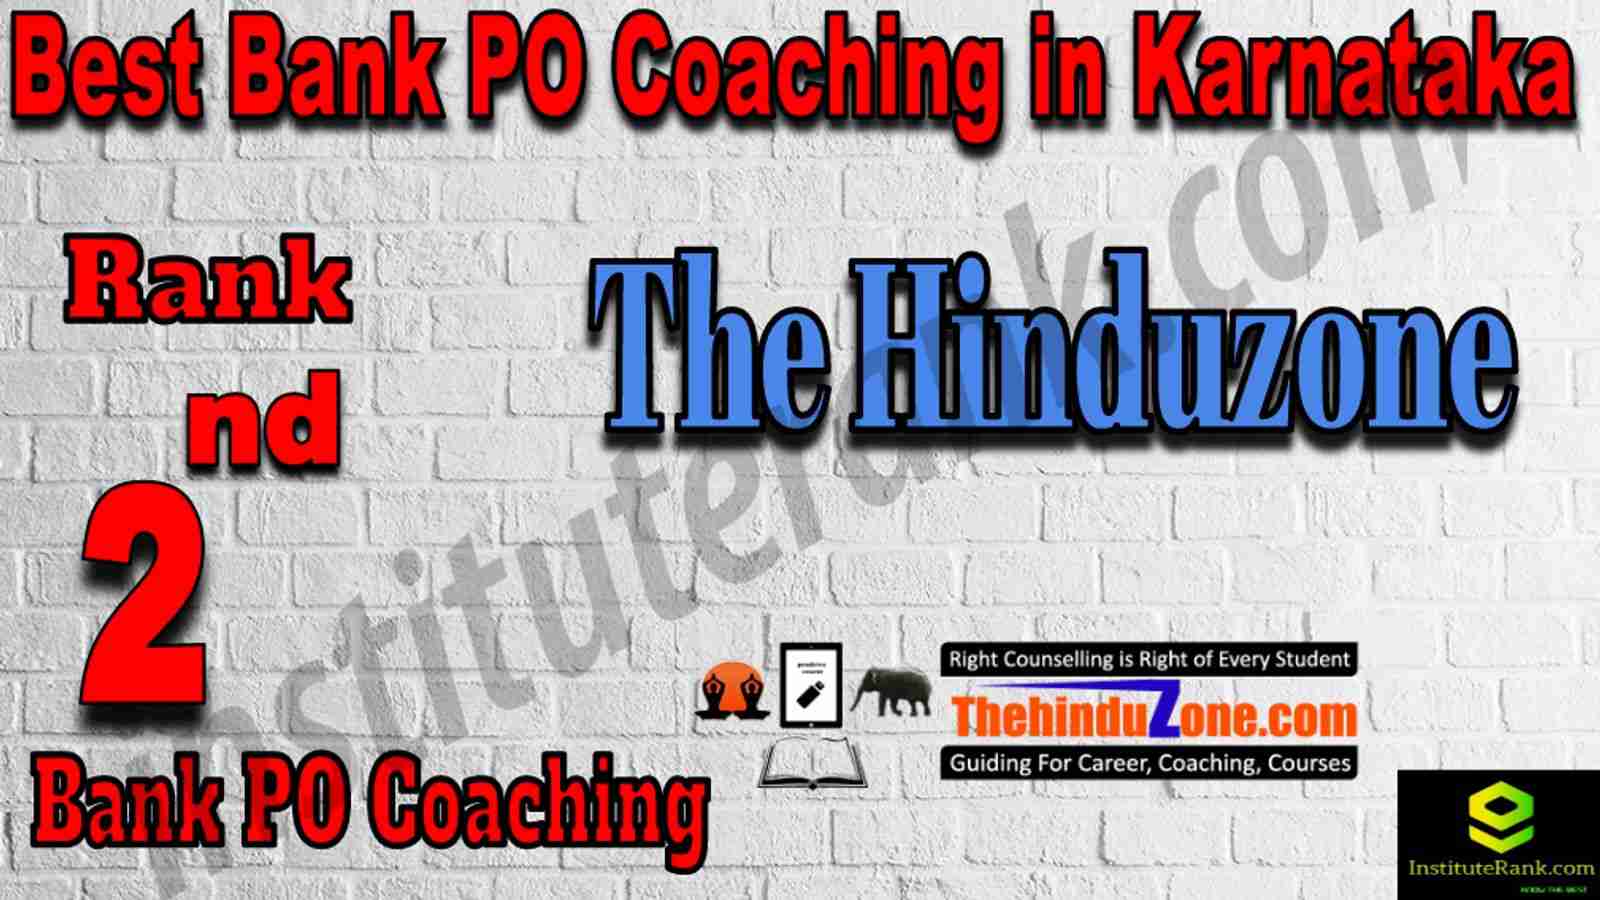 2nd Best Bank PO Coaching in Karnataka